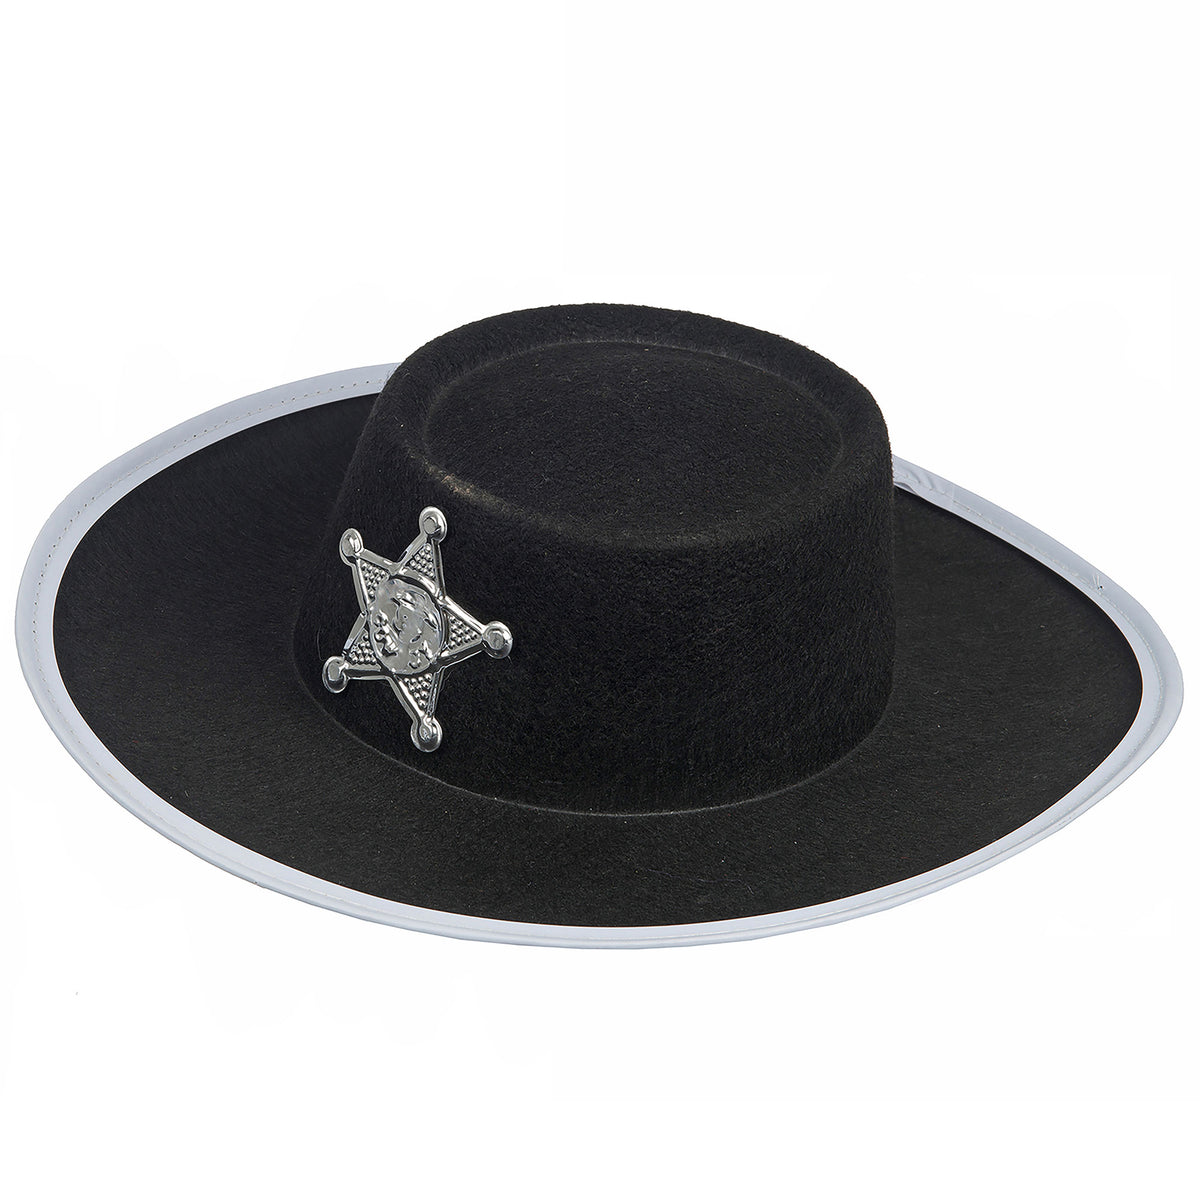 Childrens Roleplay Fancy Dress Cowboy Hat - Black